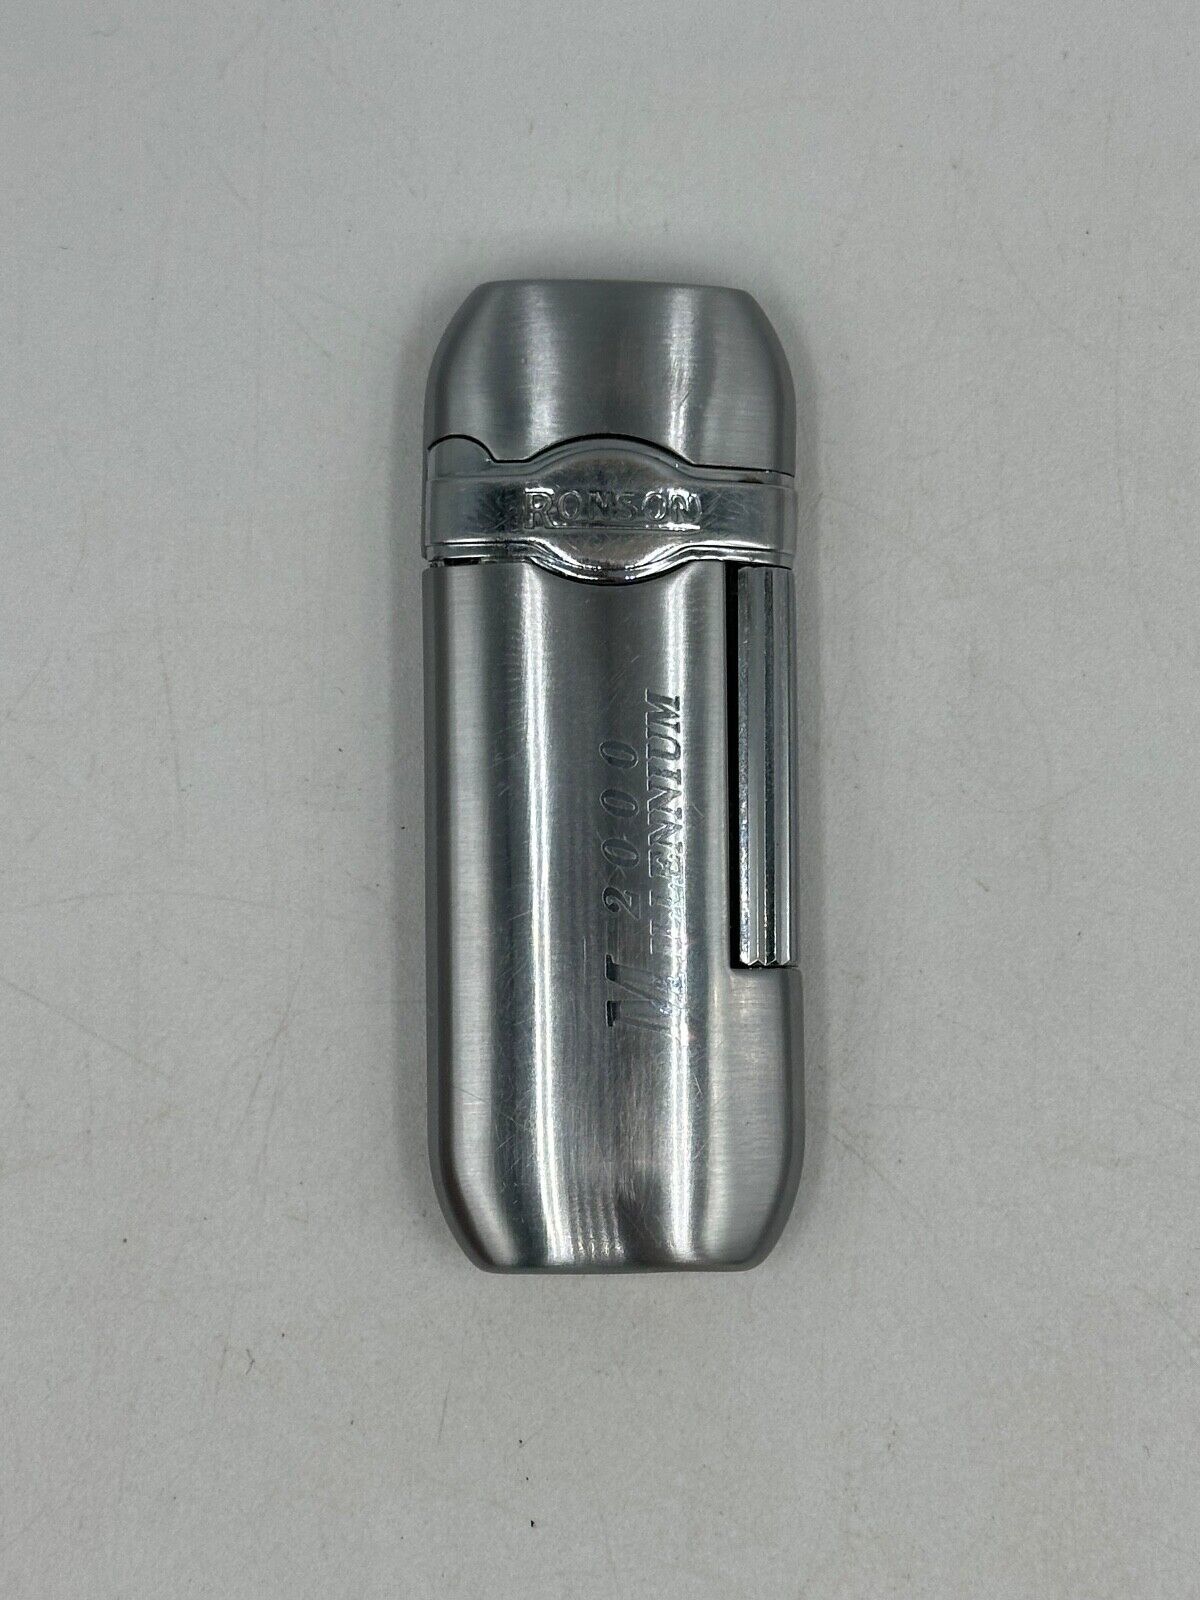 Ronson Lighter Millenium 2000 Edition Lighter - £22.62 GBP